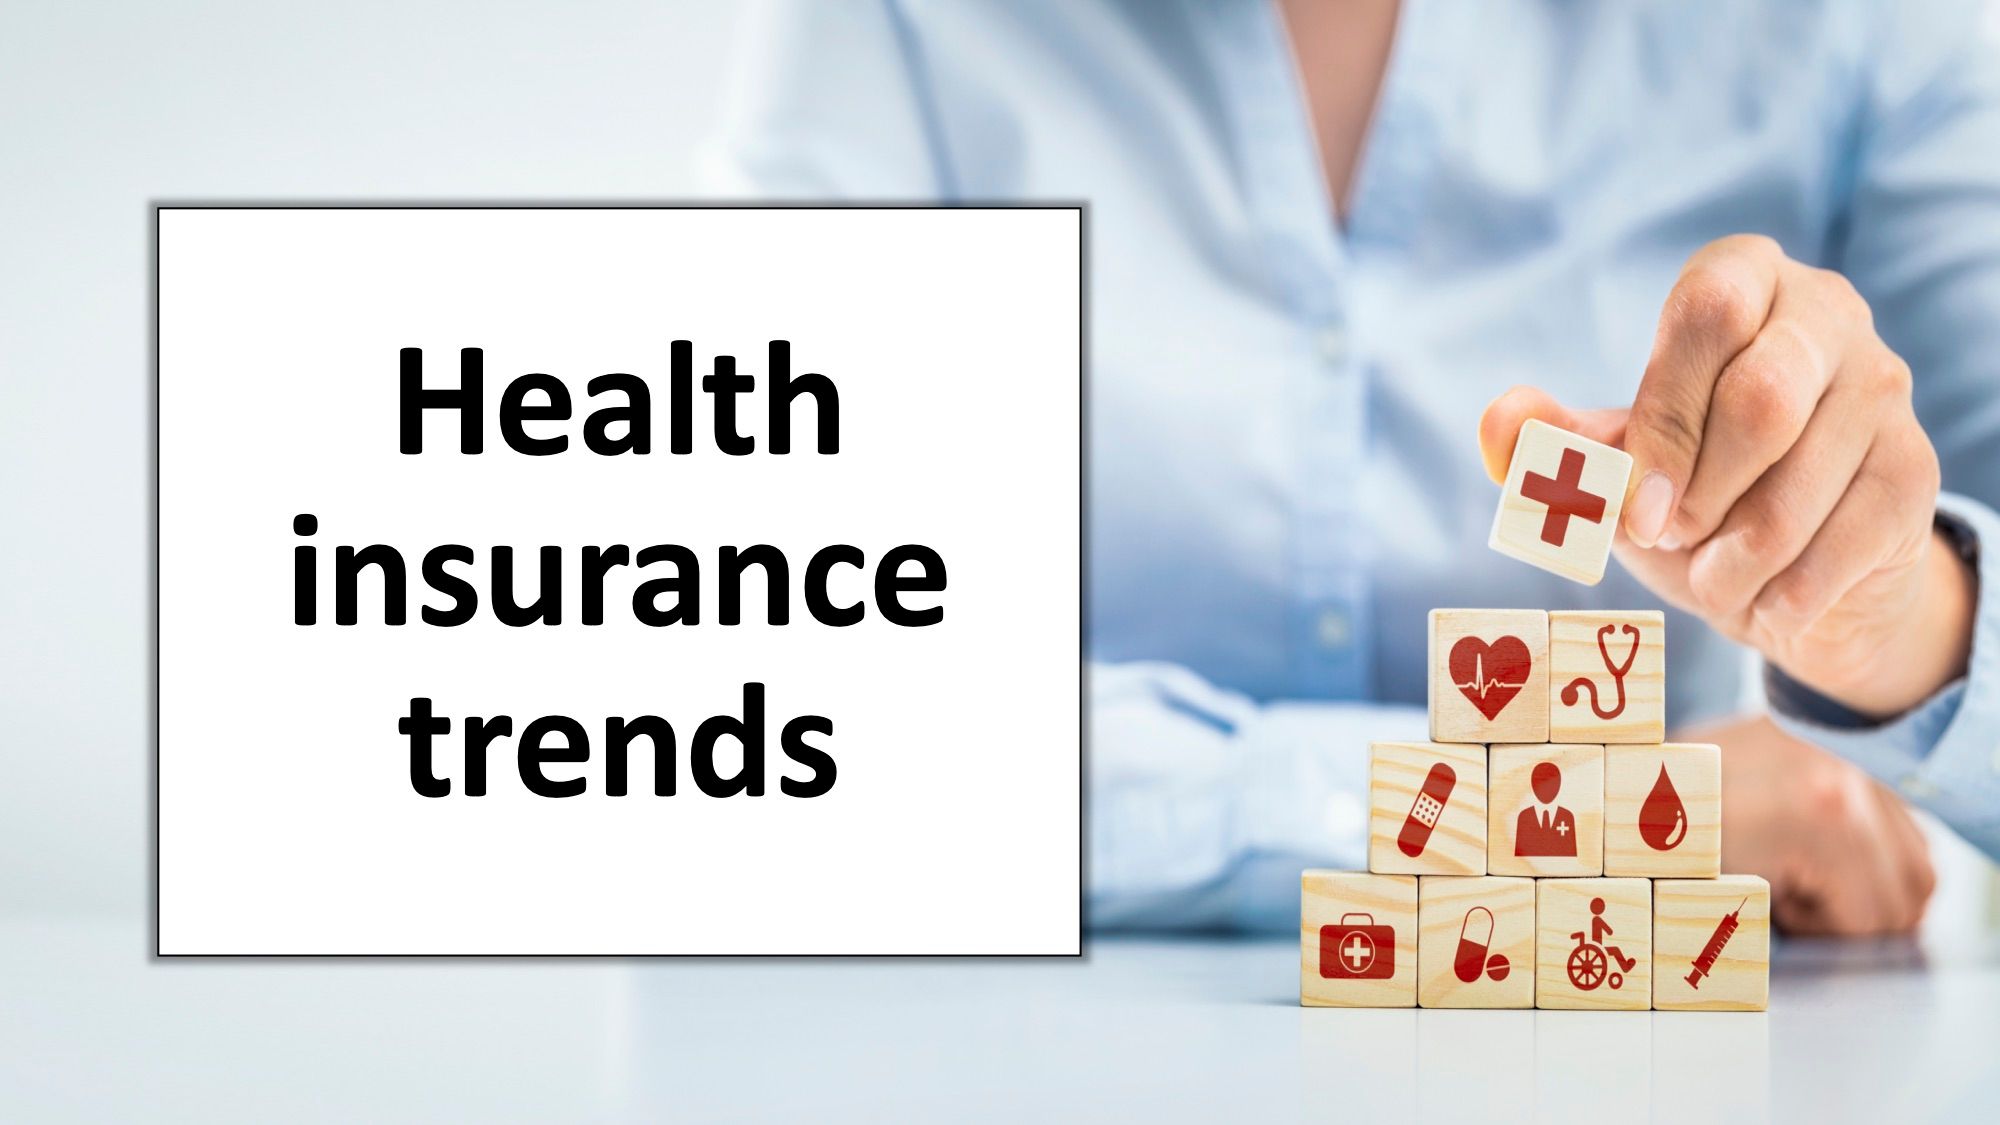 Health insurance trends